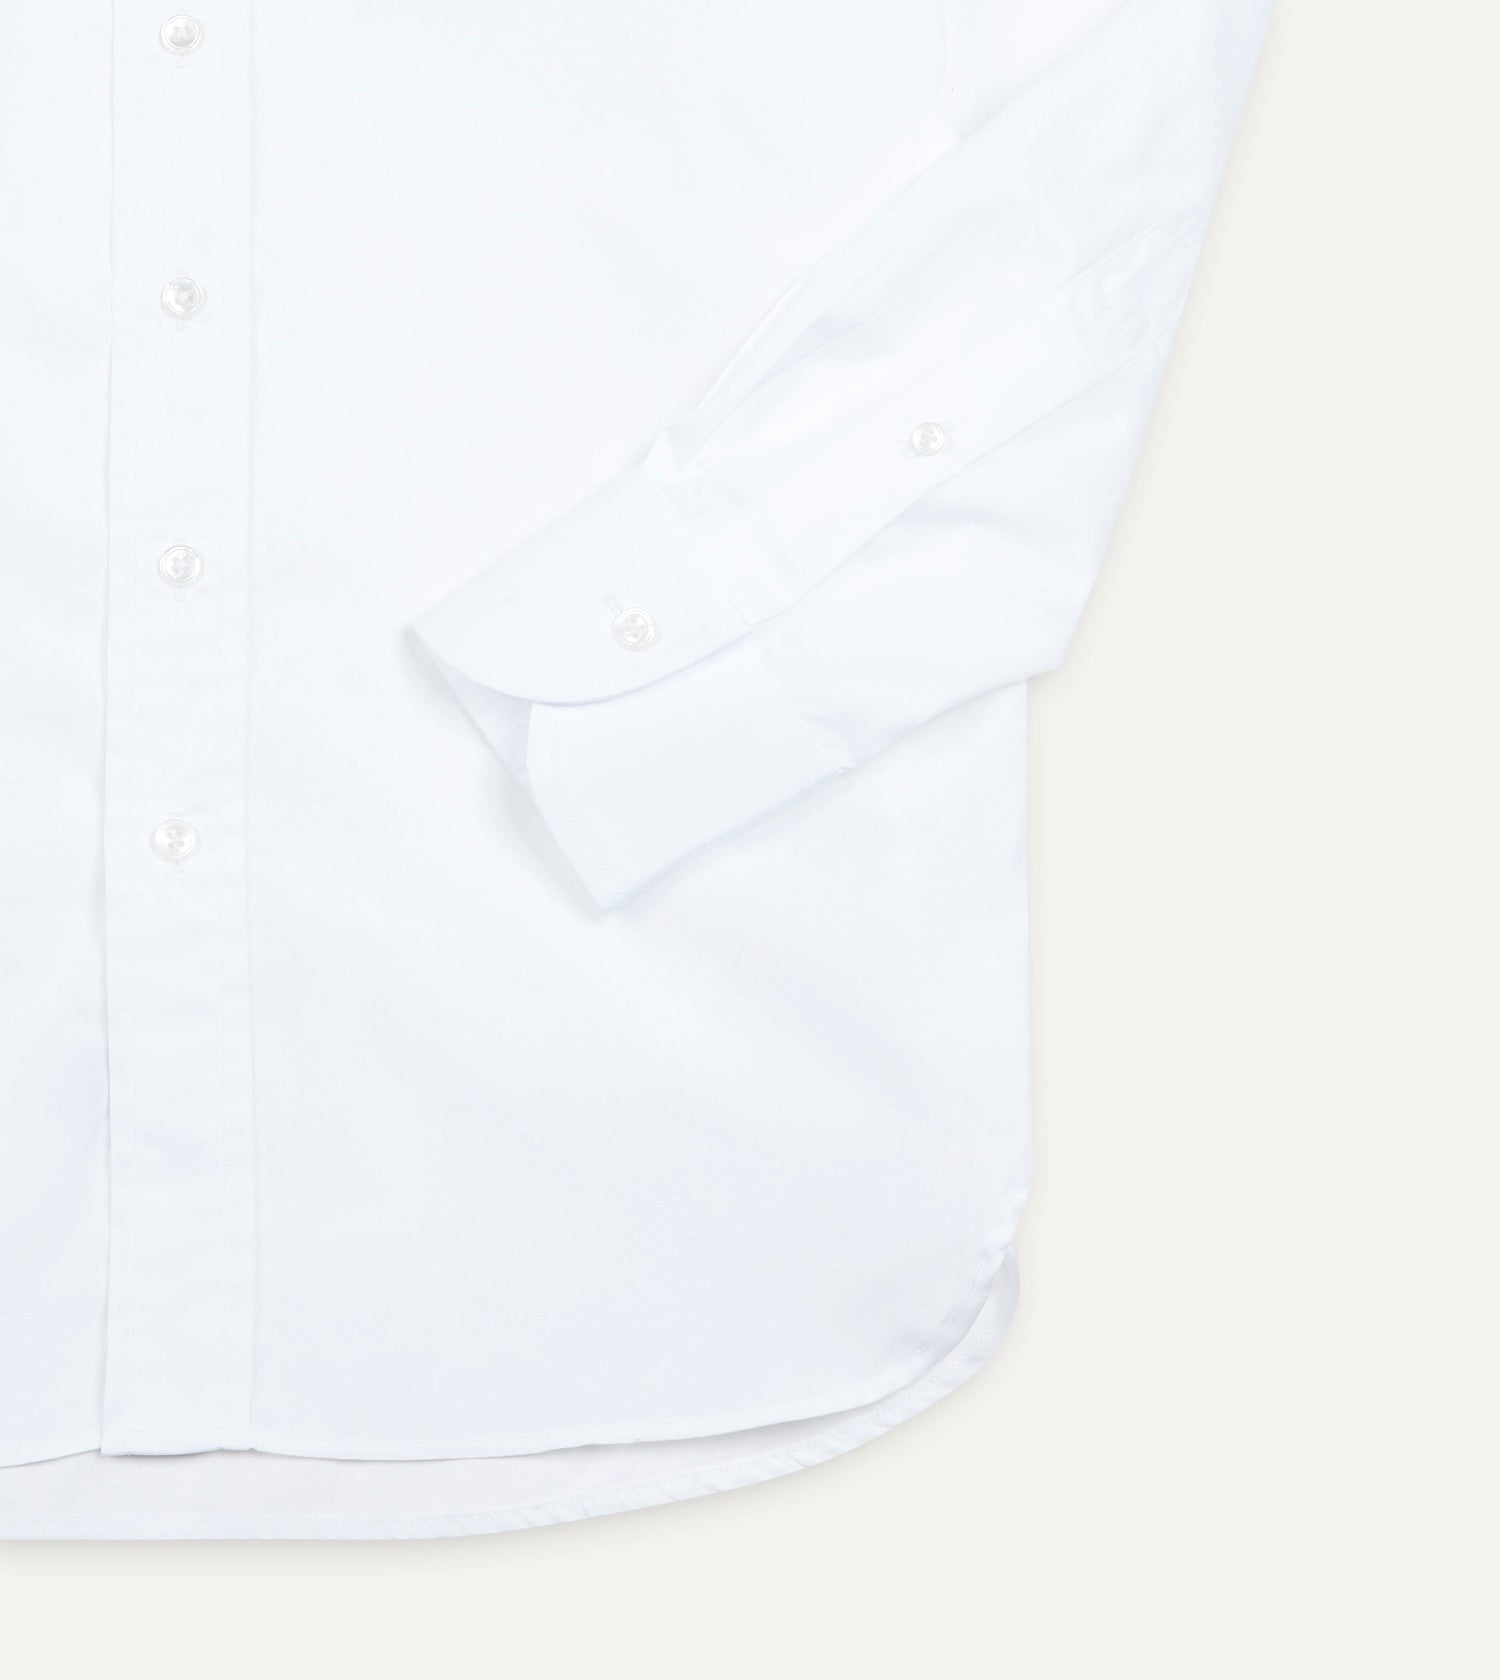 White Cotton Spread Collar Poplin Shirt